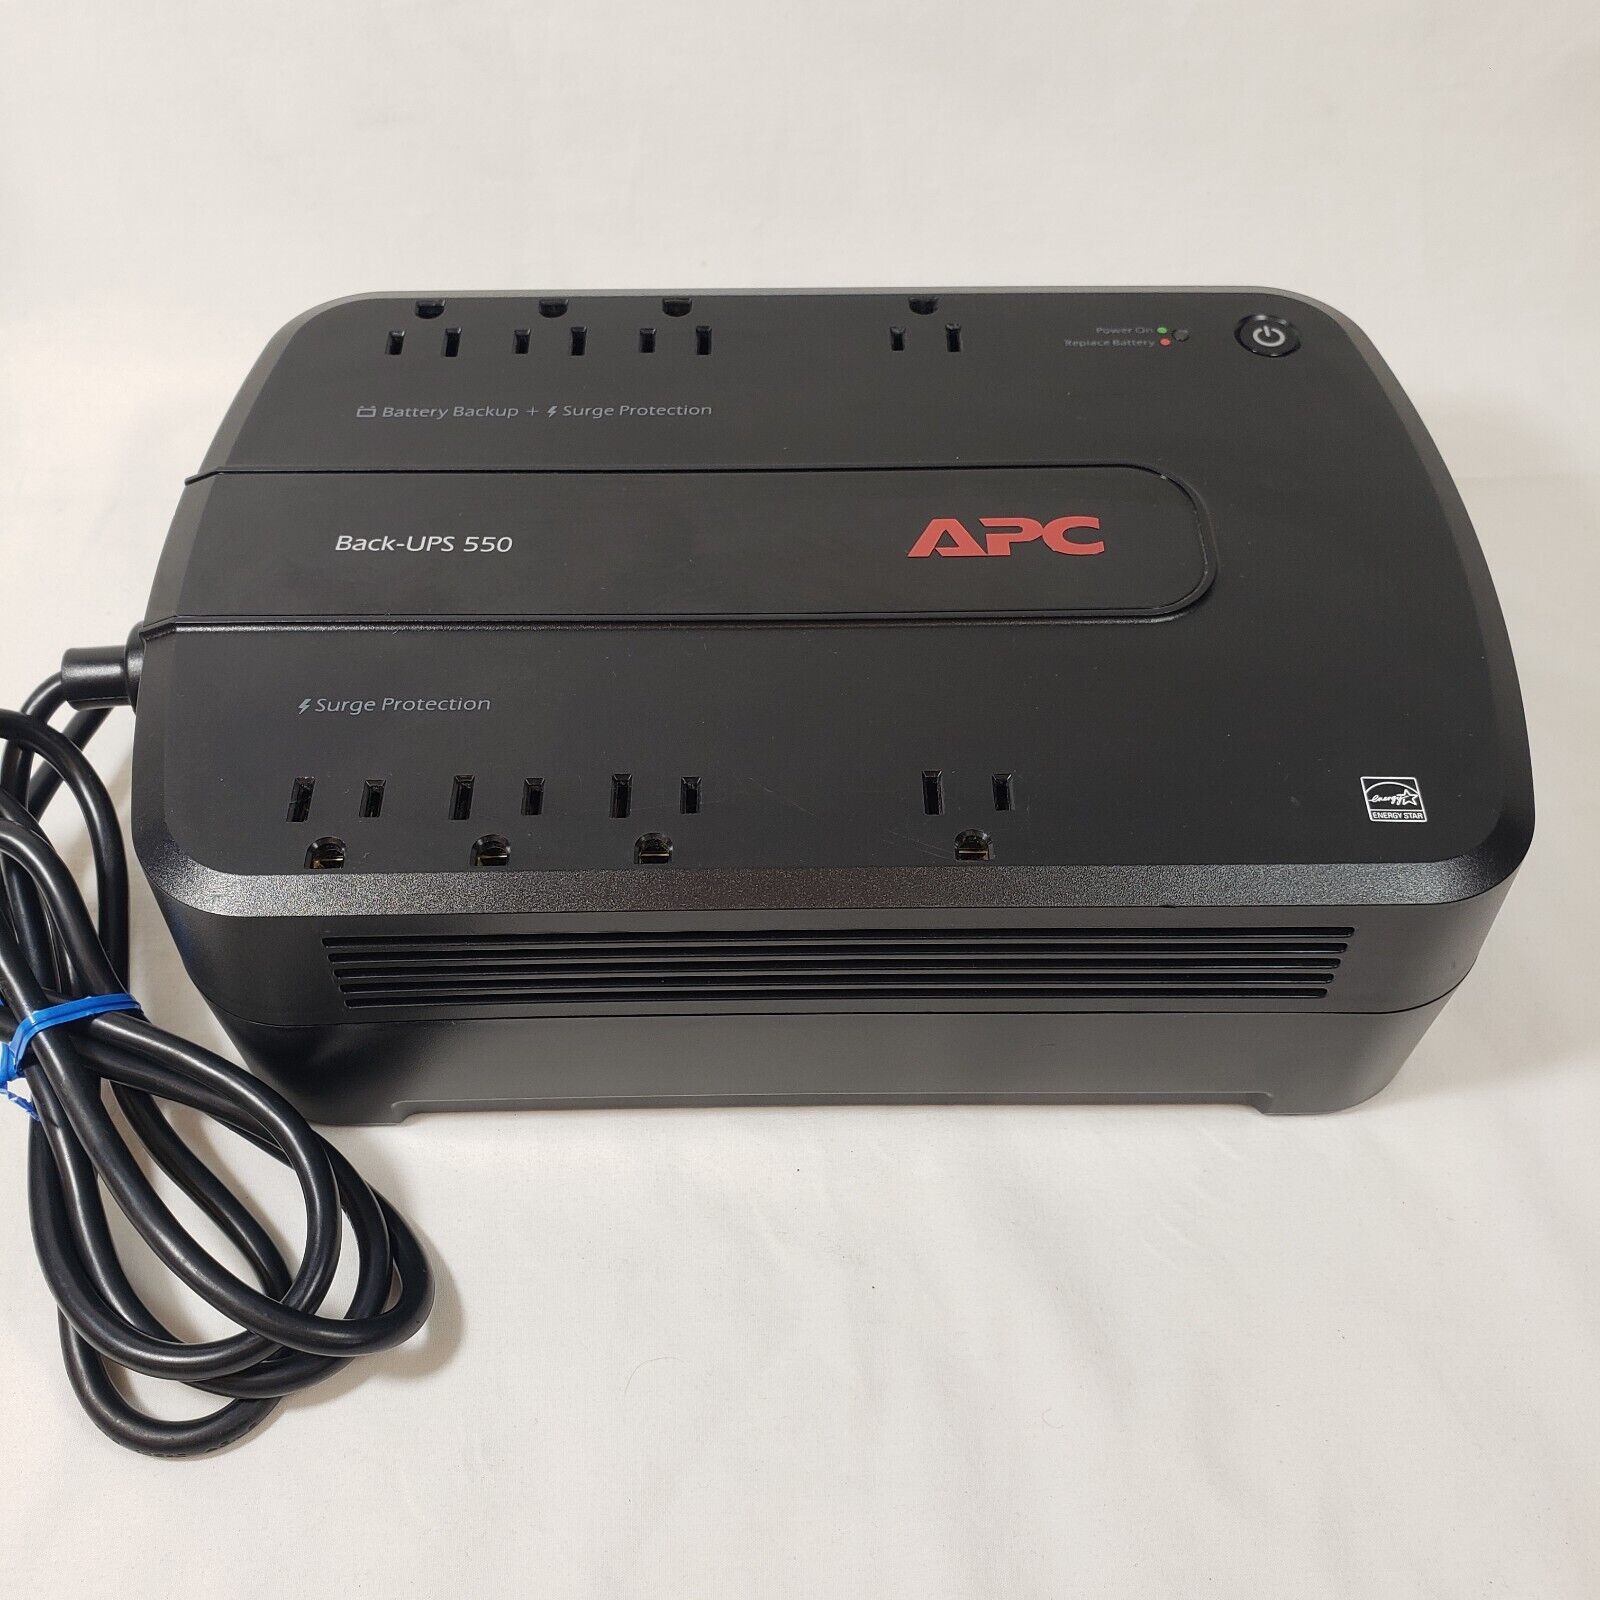 APC Back-UPS 550 *No Battery* Backup Surge Protection BE550G 8 Outlets 13144